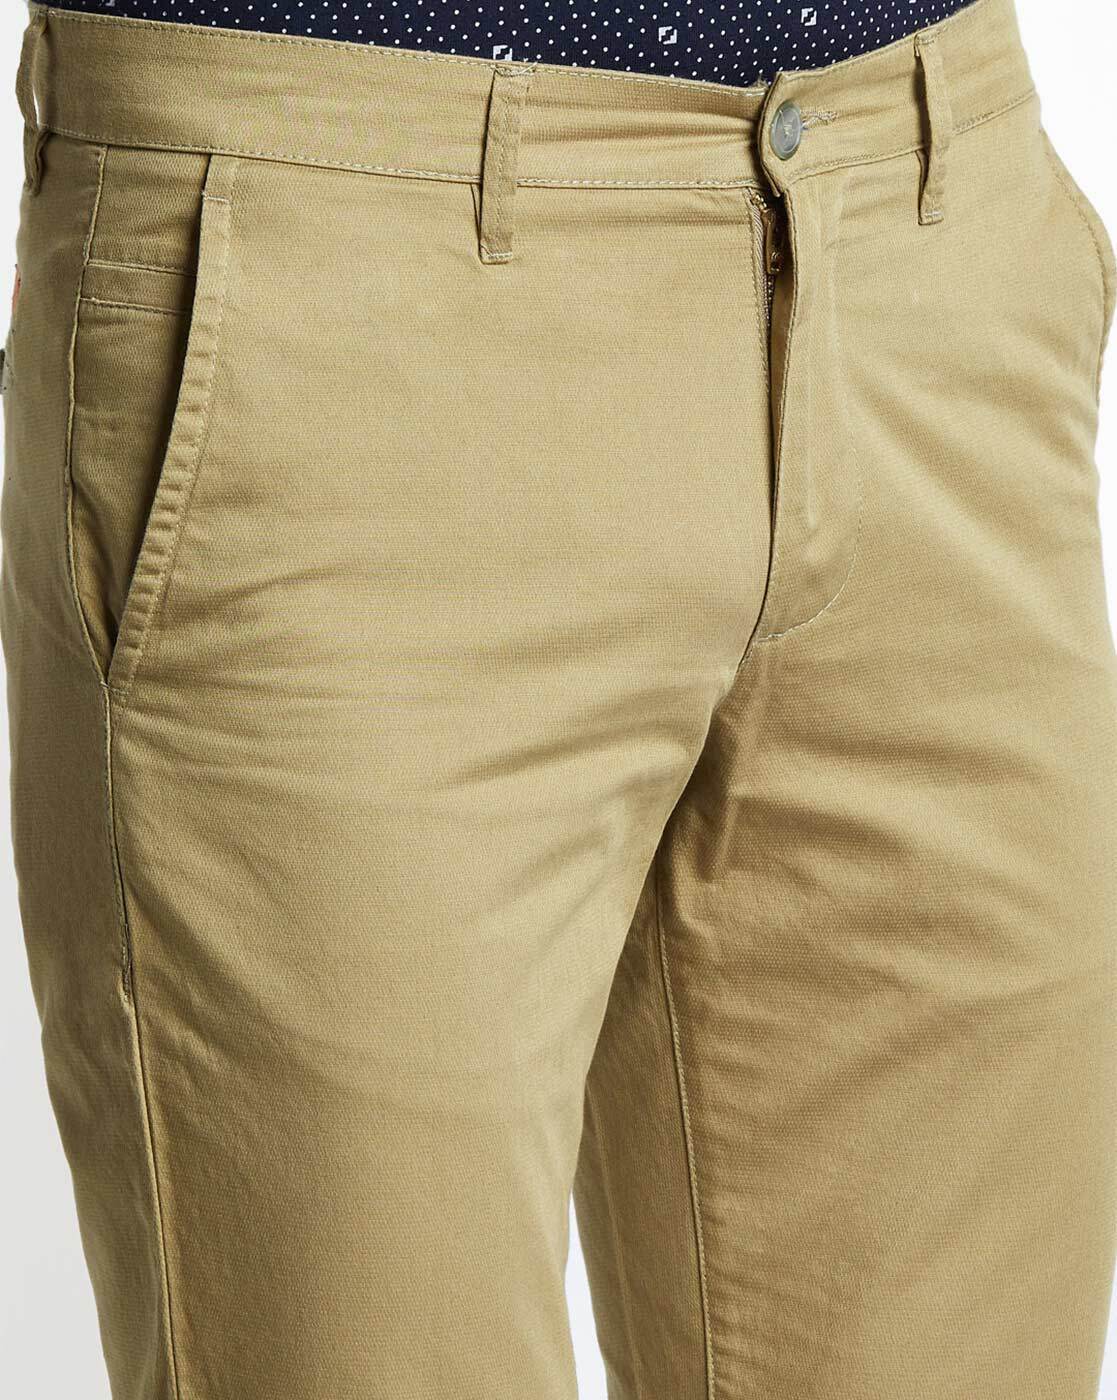 Buy Spiritus by Pantaloons Men's Straight Fit Casual Trousers  (110044222_Indigo Khaki_32W x 32L) at Amazon.in